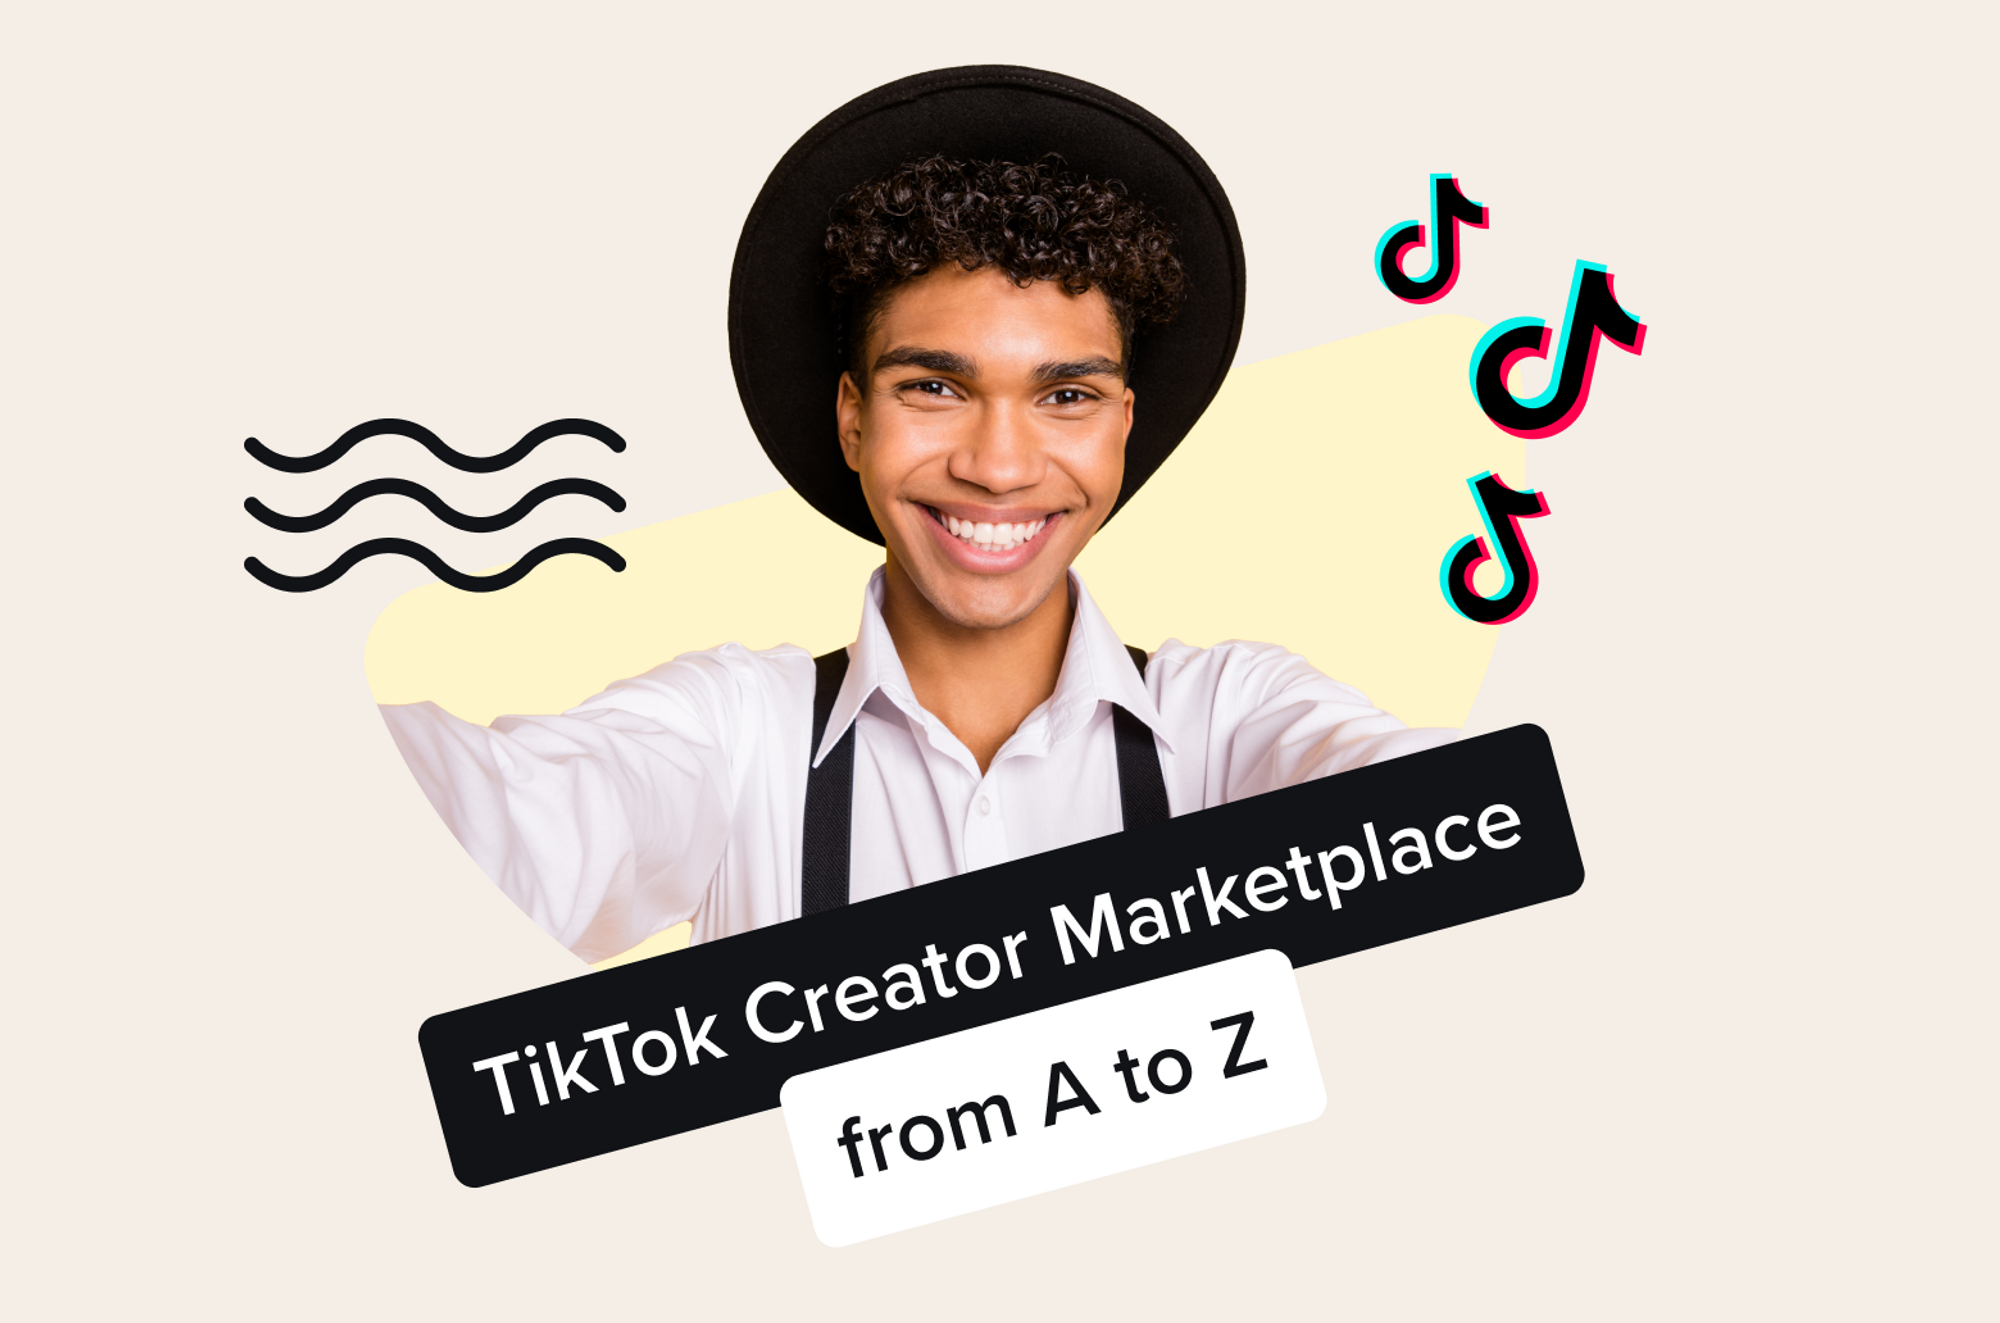 TikTok Creator Marketplace: The ultimate guide for
2023